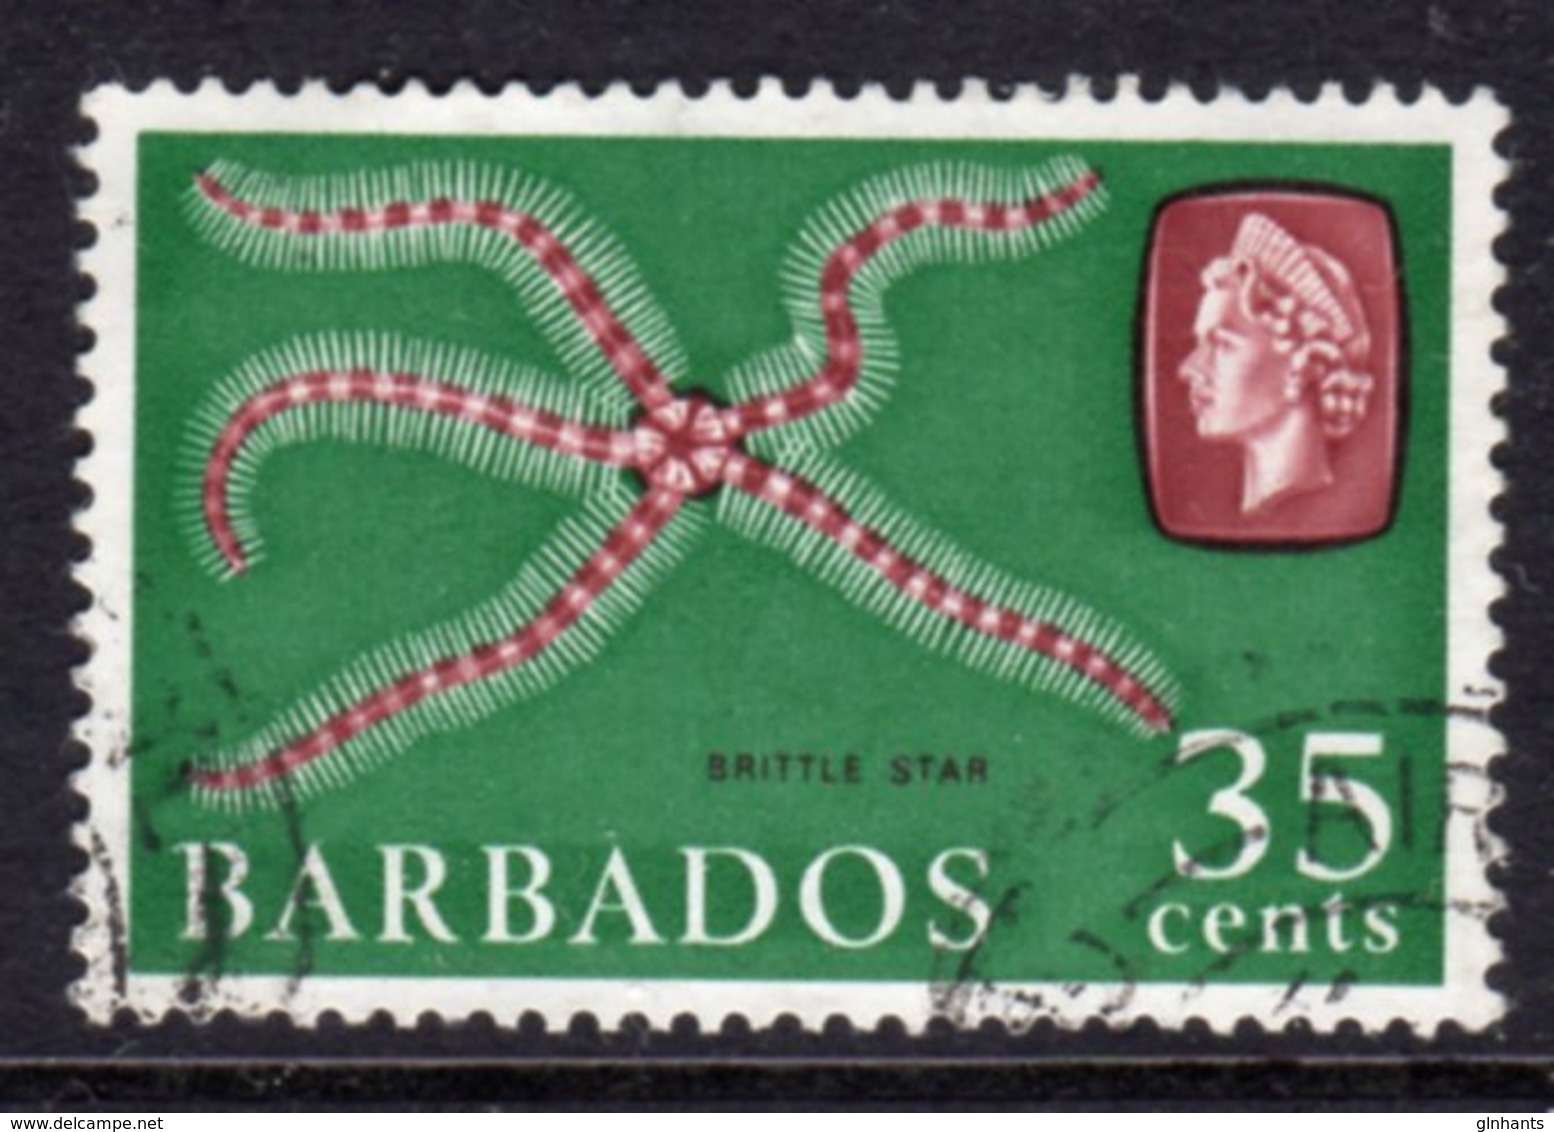 BARBADOS - 1965 35c DEFINITIVE STAMP WMK W12 UPRIGHT REF D USED SG 332 - Barbados (...-1966)